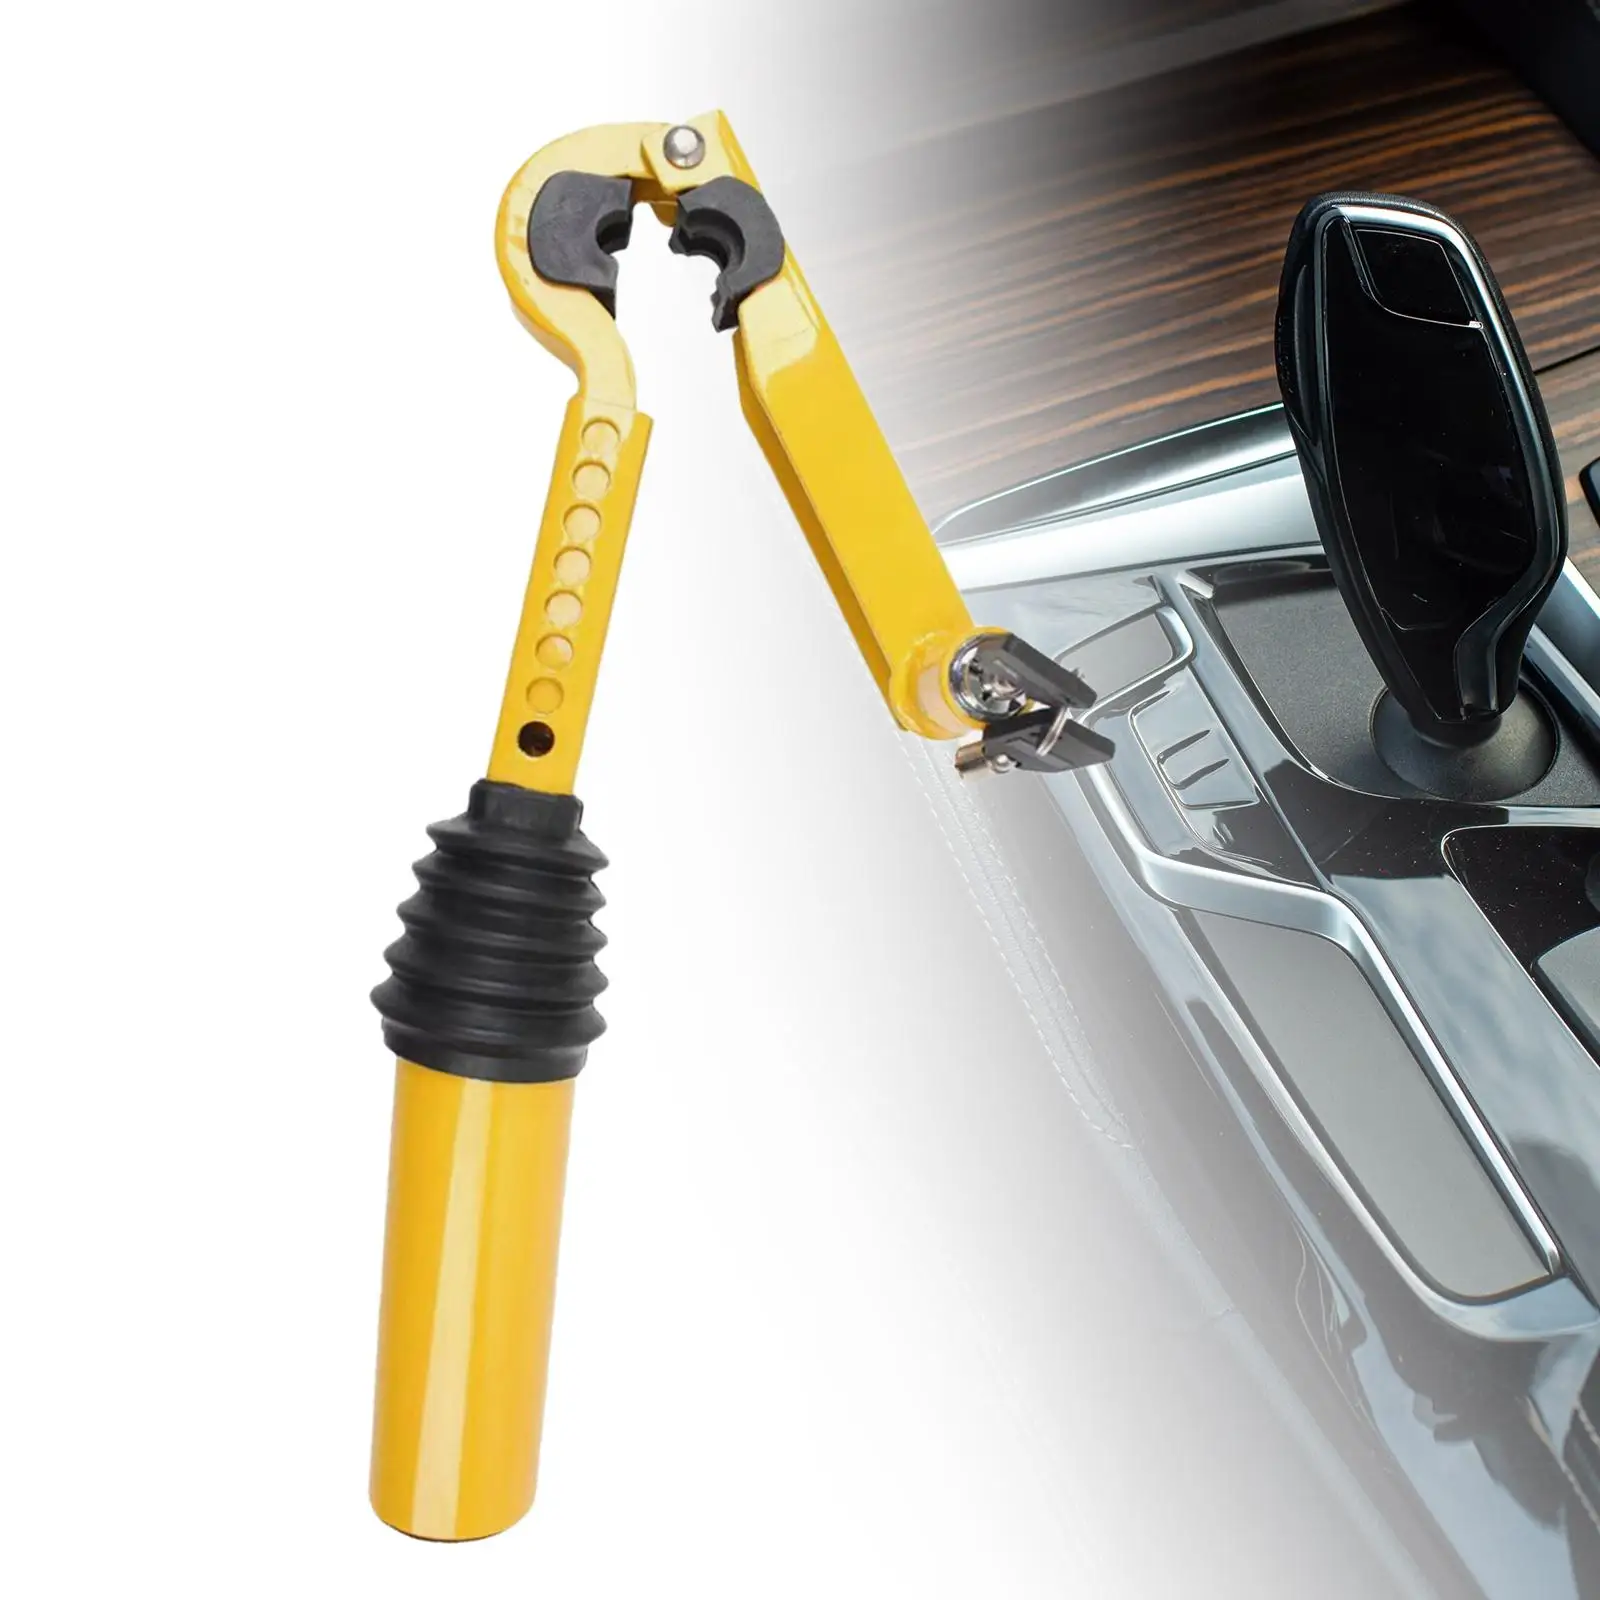 Automotive Car Handbrake Lock Anti Auto Accessories for Trailer